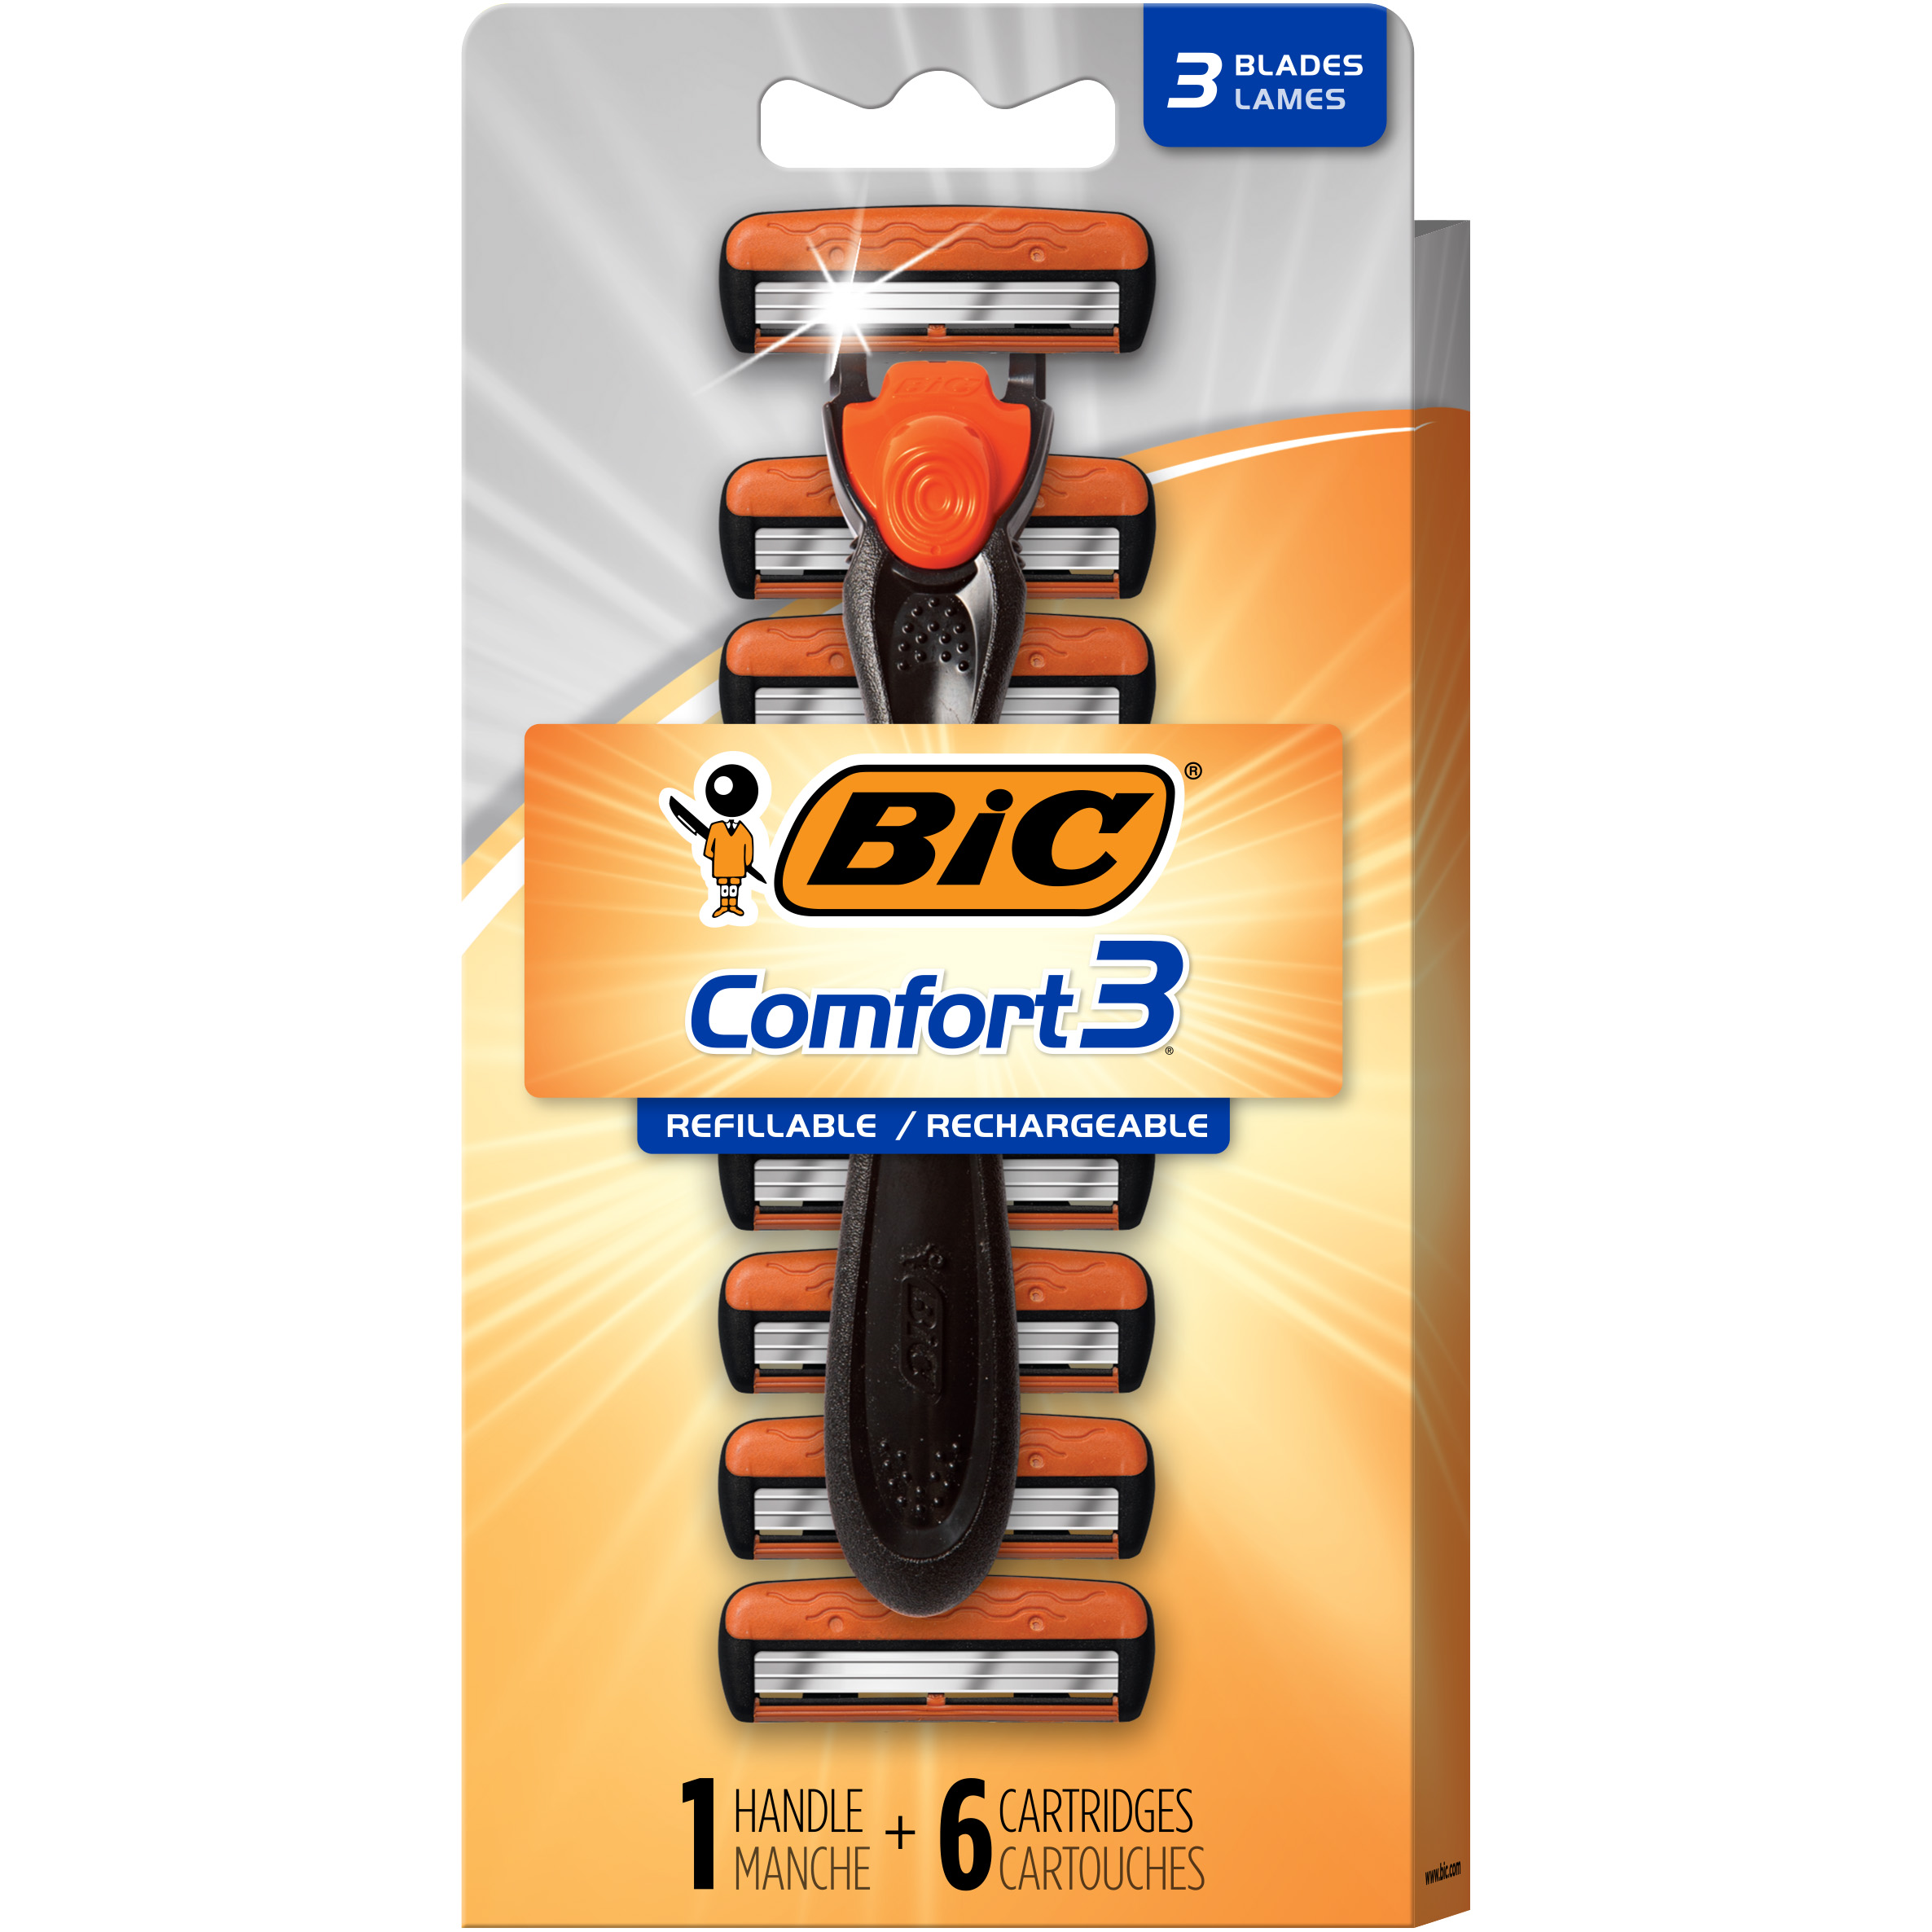 BIC Comfort 3 Hybrid Men's Disposable Razor, Sensitive Skin Razor, 1 Black Handle and 6 Cartridges - image 5 of 10